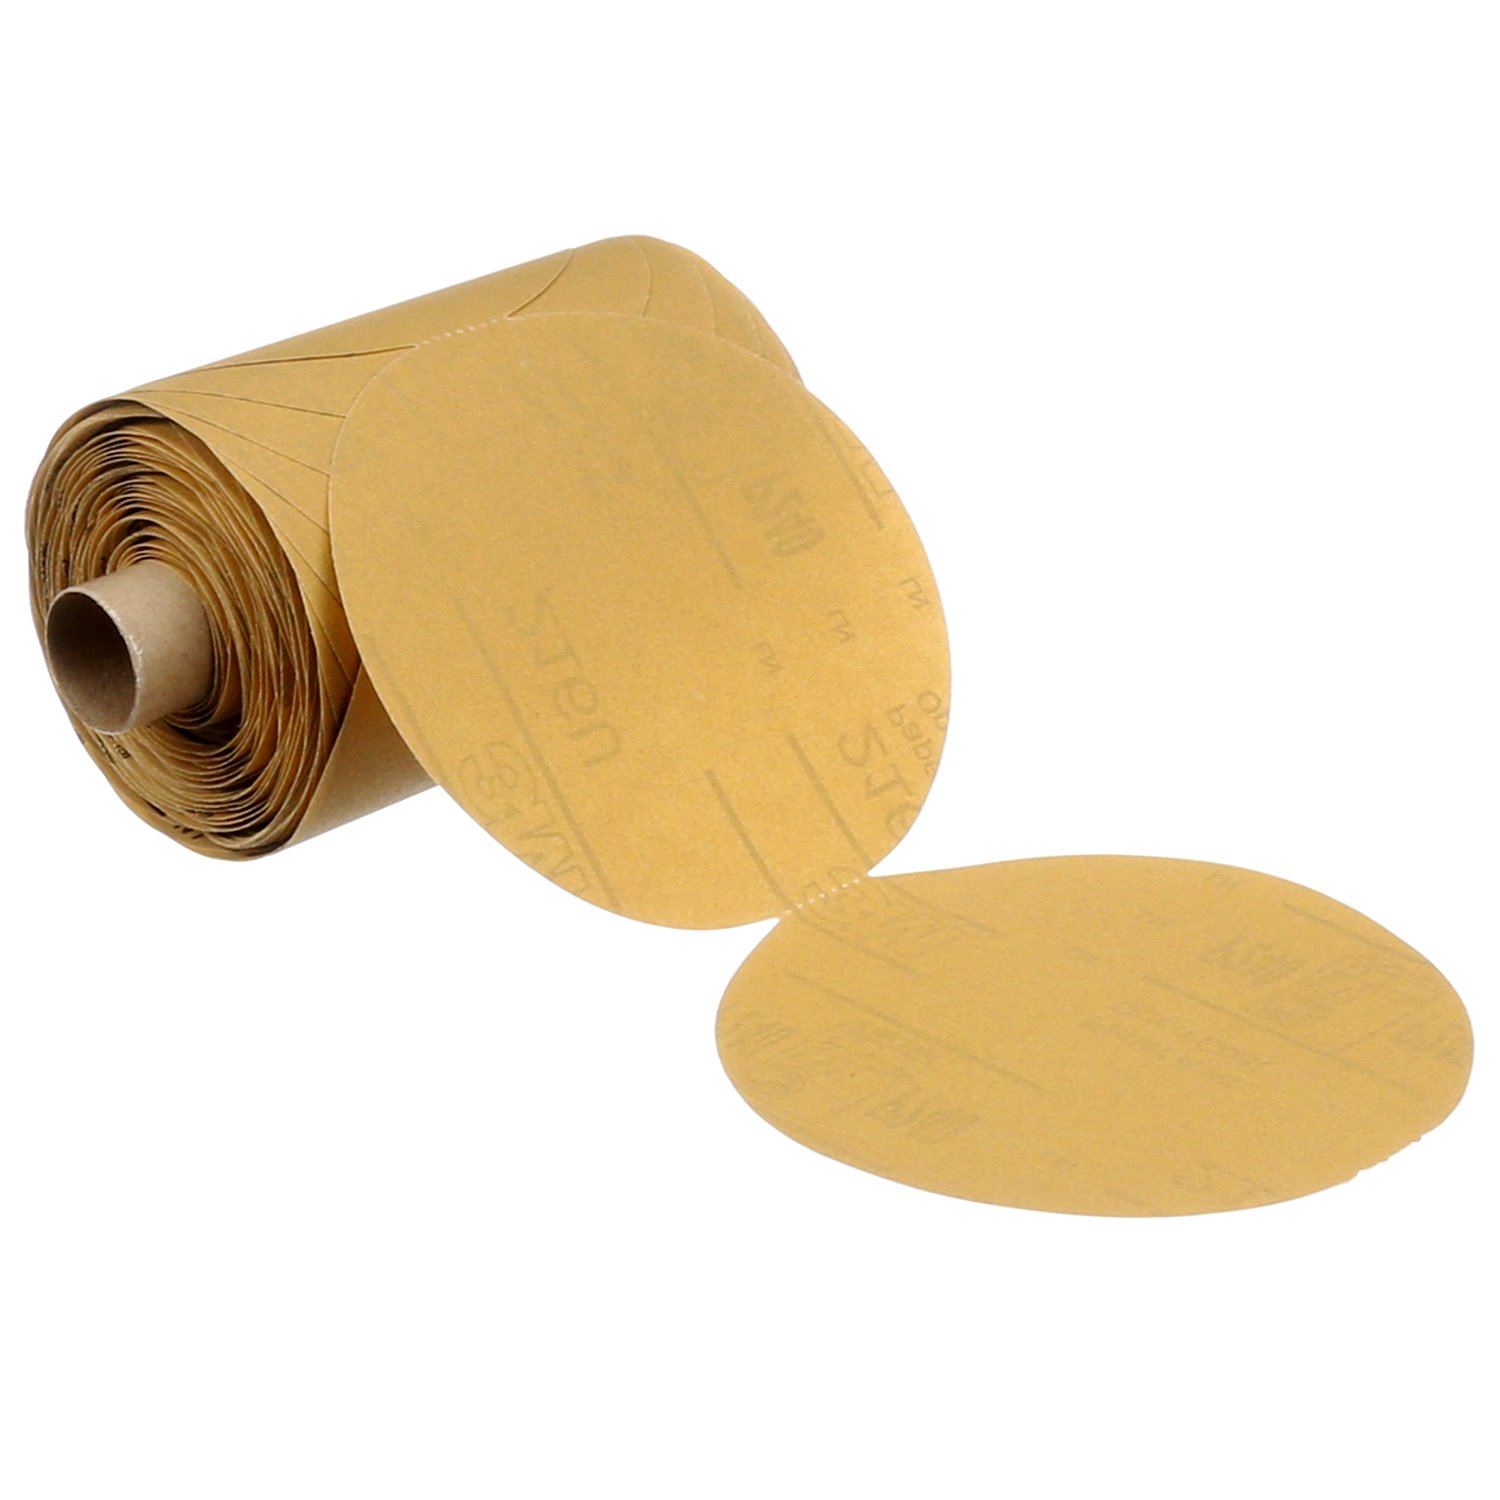 7000028128 - 3M Stikit Gold Paper Disc Roll 216U, 5 in x NH P180 A-weight, 175
Discs/Roll, 6 Rolls/Case